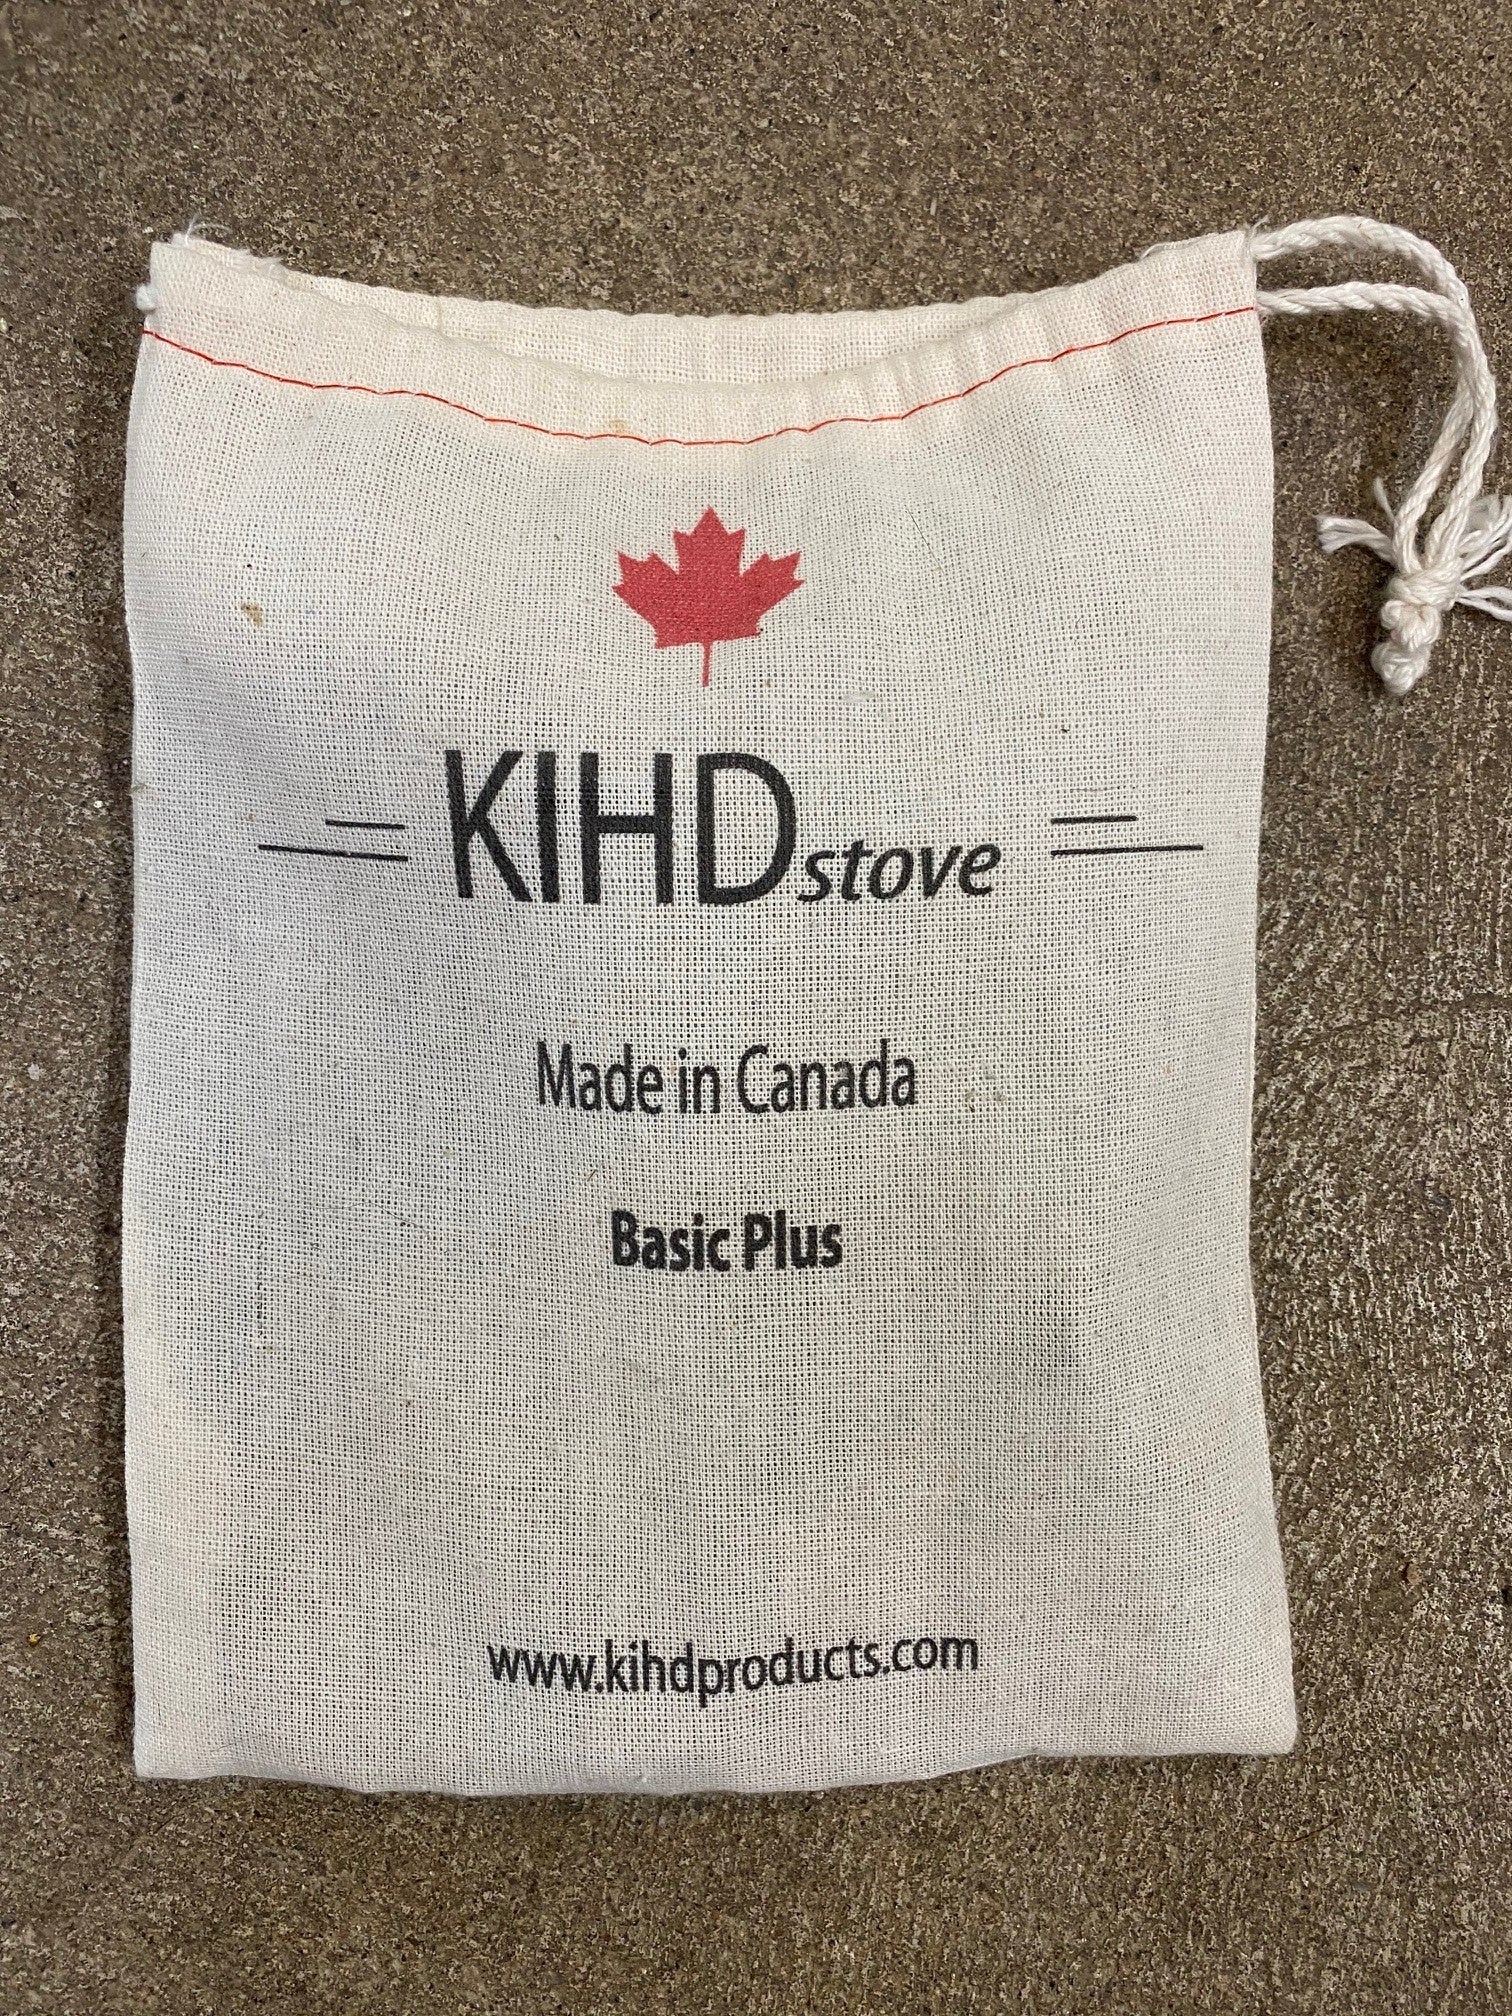 KIHD - Basic Plus Twig Stove